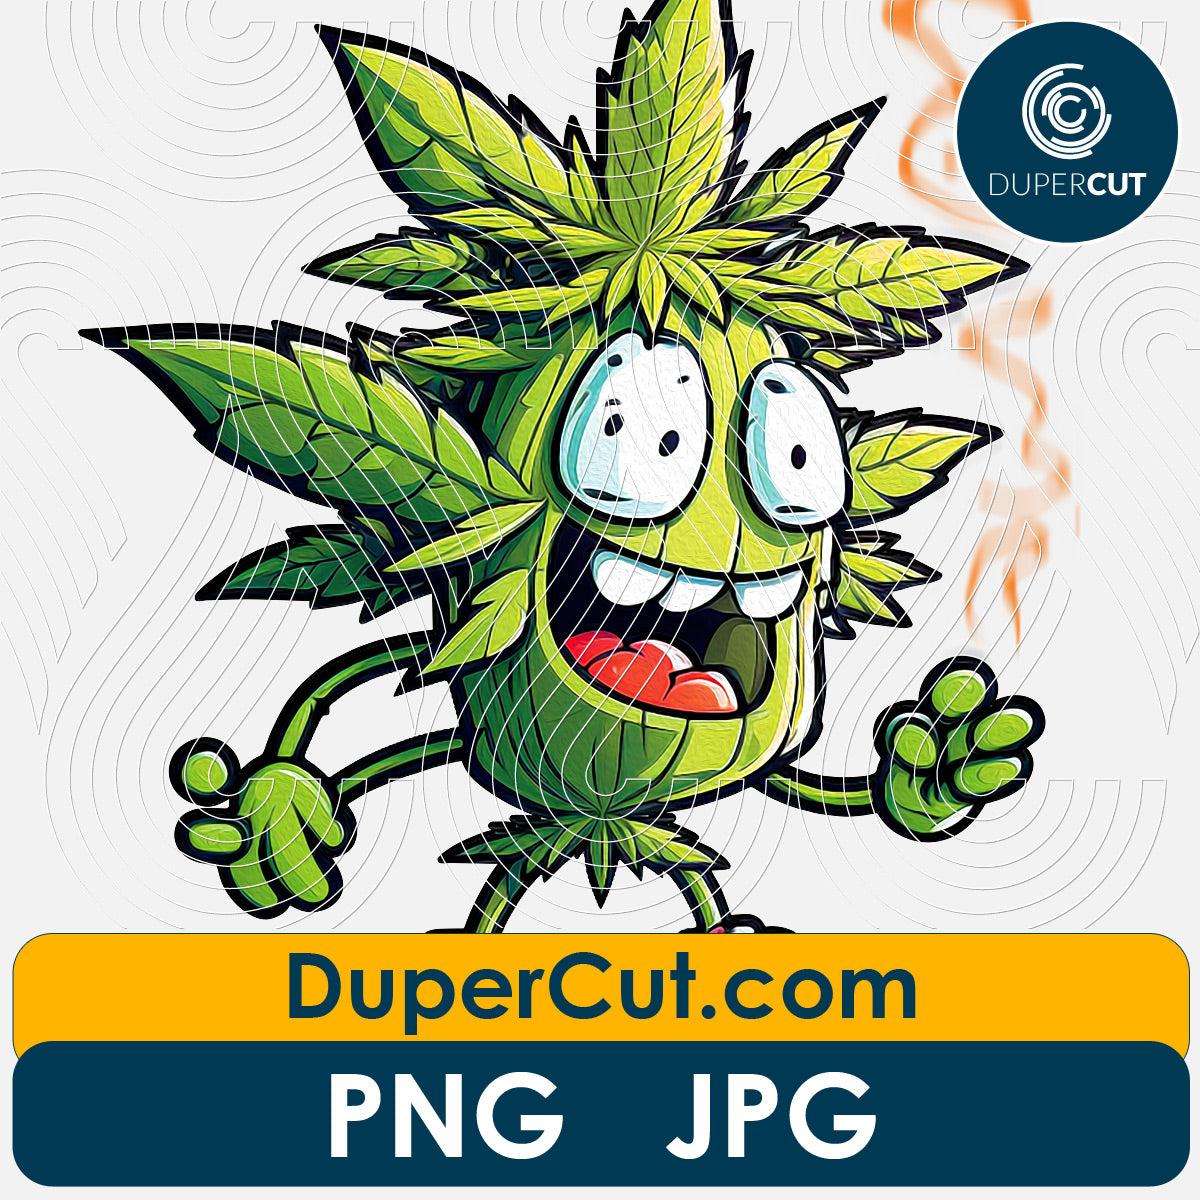 Funny Marijuana leaf character - cartoon style  - full color sublimation design, print on demand illustration, transparent background, high resolution, by DuperCut.com